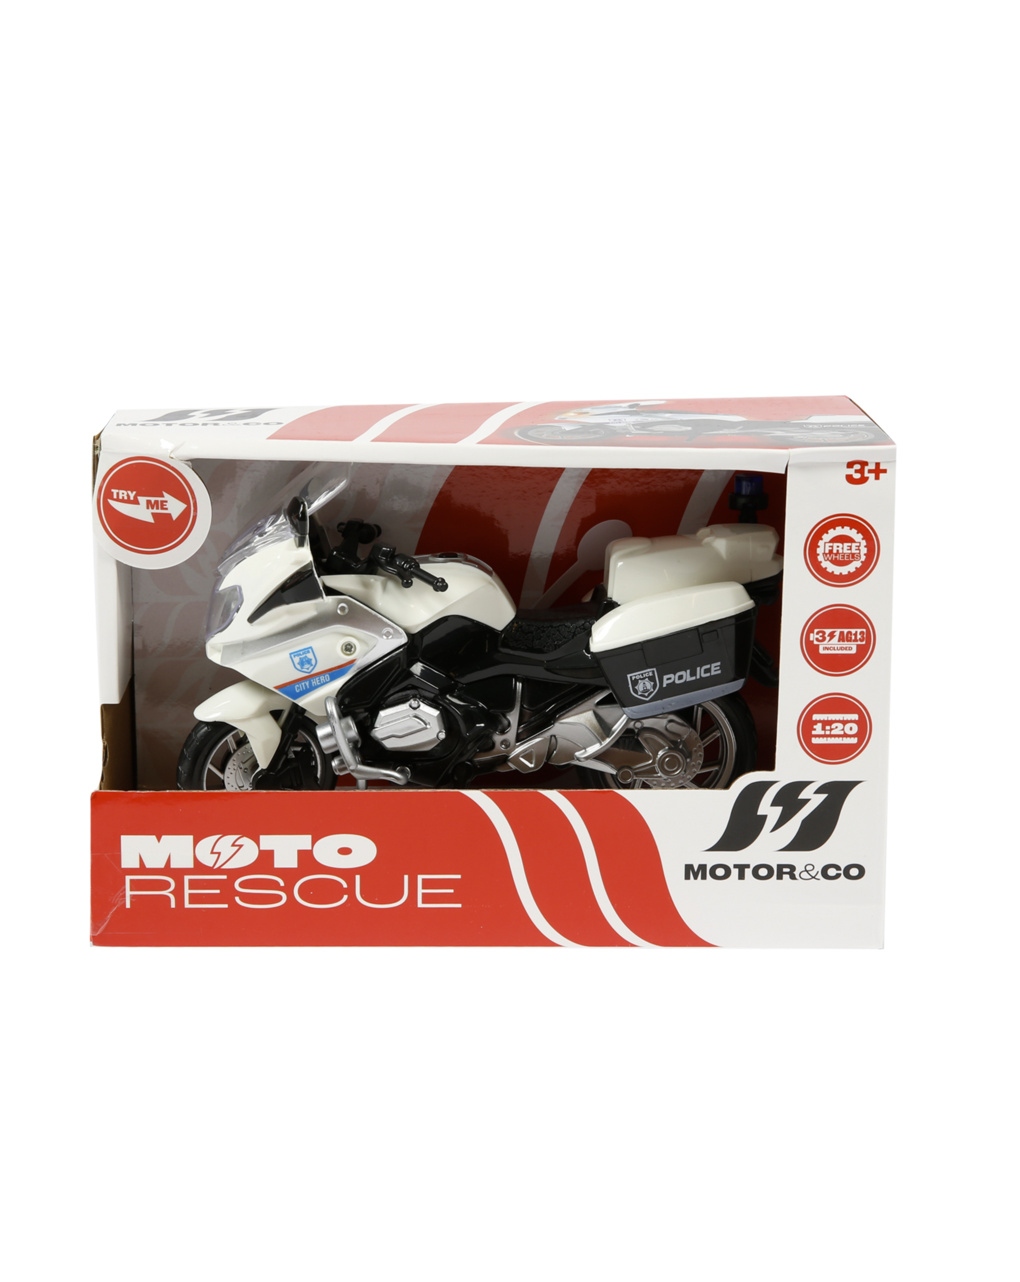 Moto rescue - MOTOR & CO.